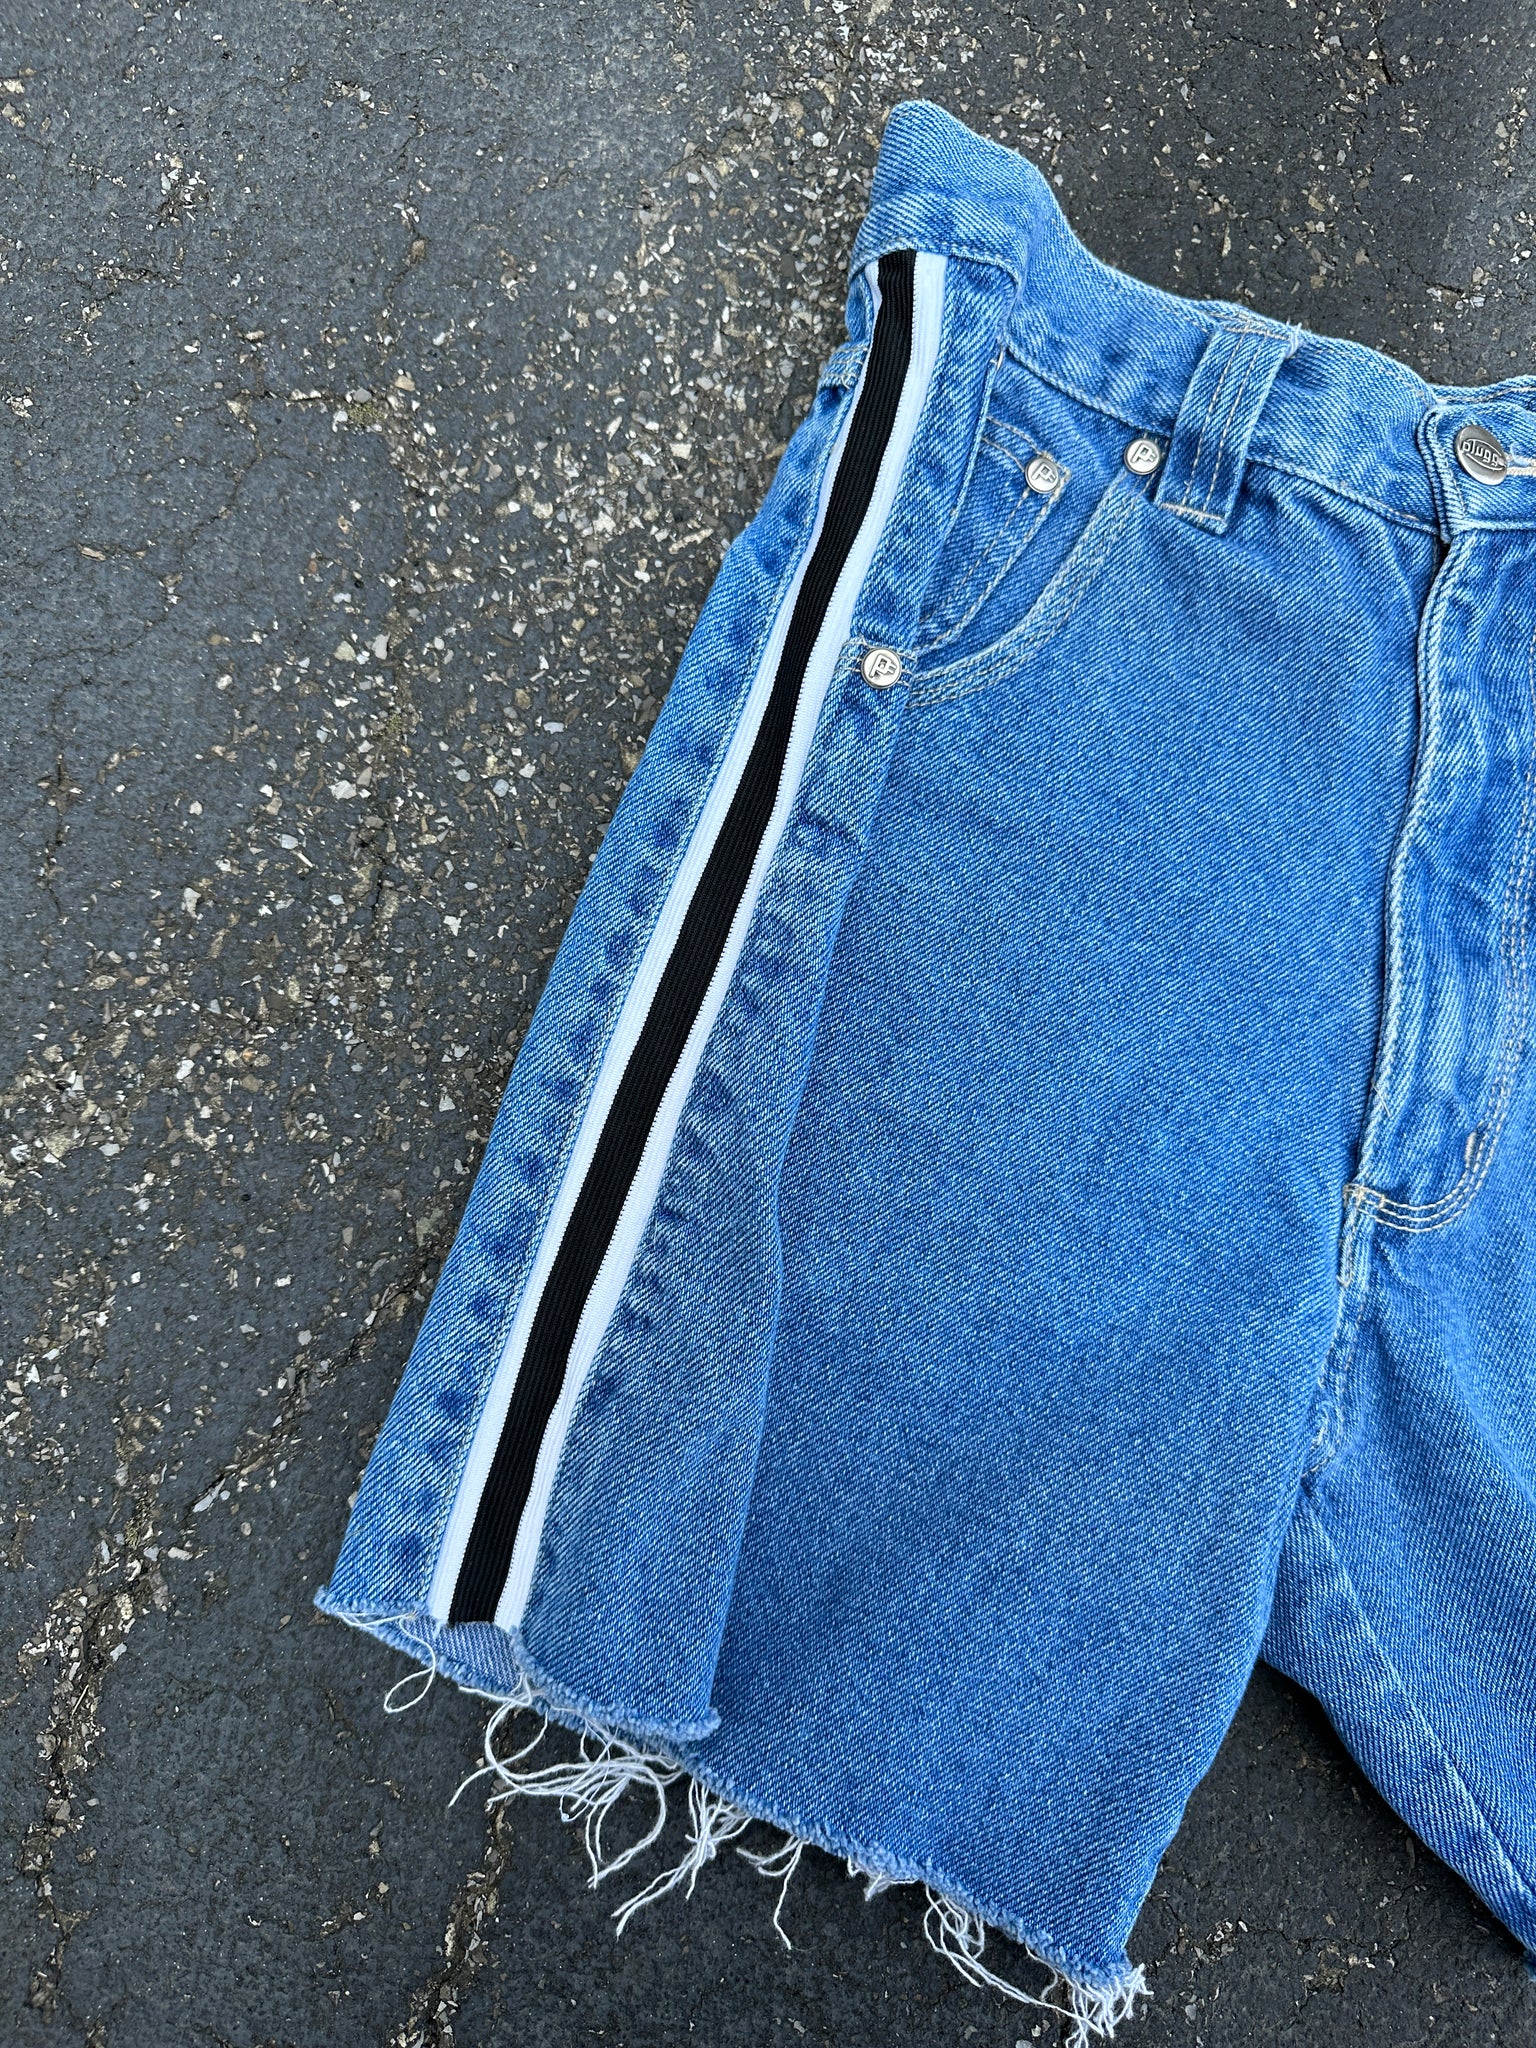 24" jean shorts